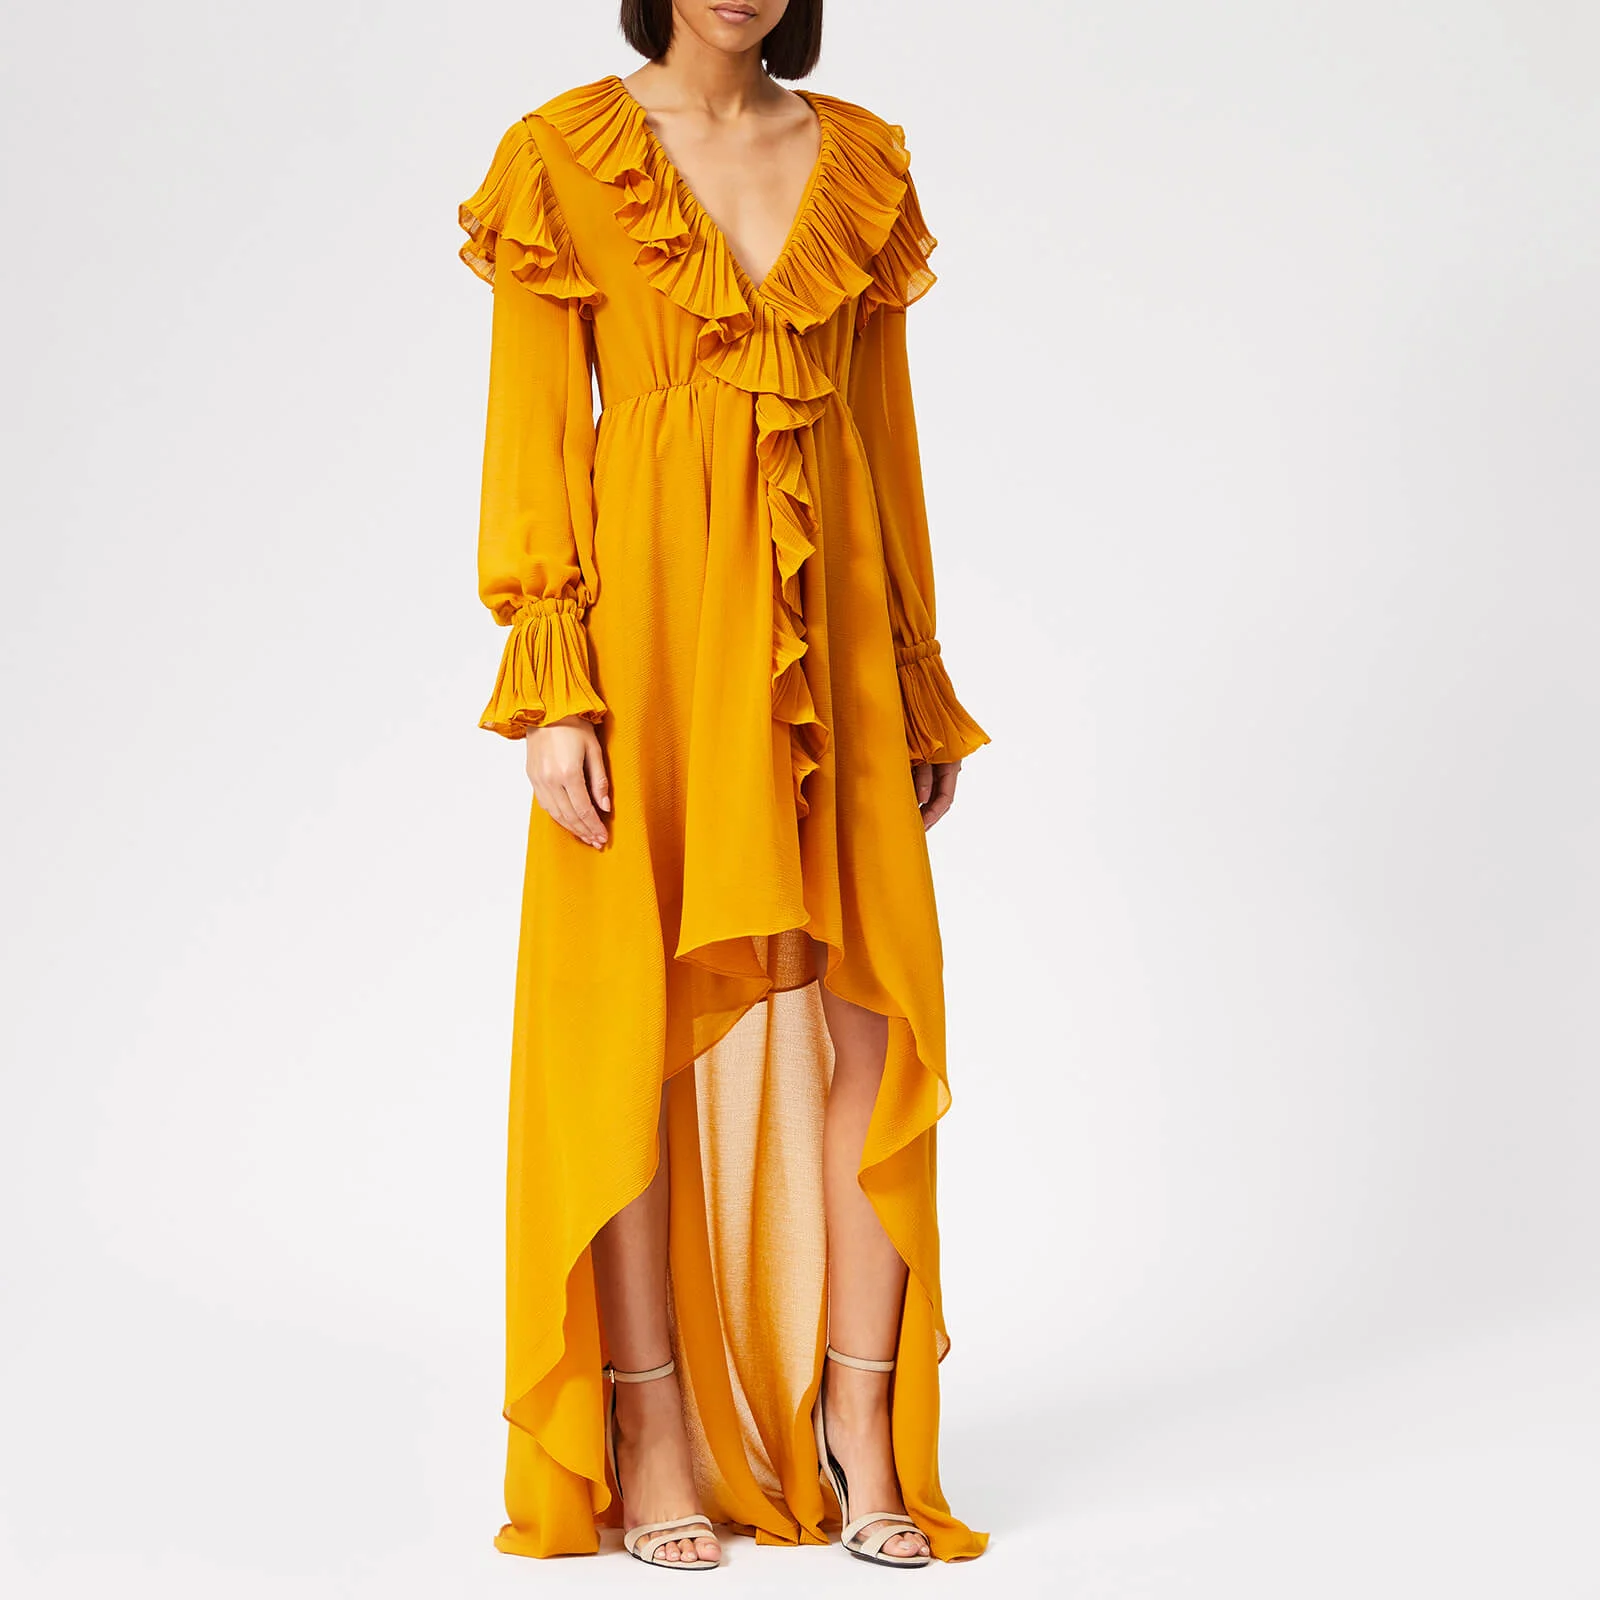 Philosophy di Lorenzo Serafini Women's Ruffle Detail Midi Dress - Yellow Image 1